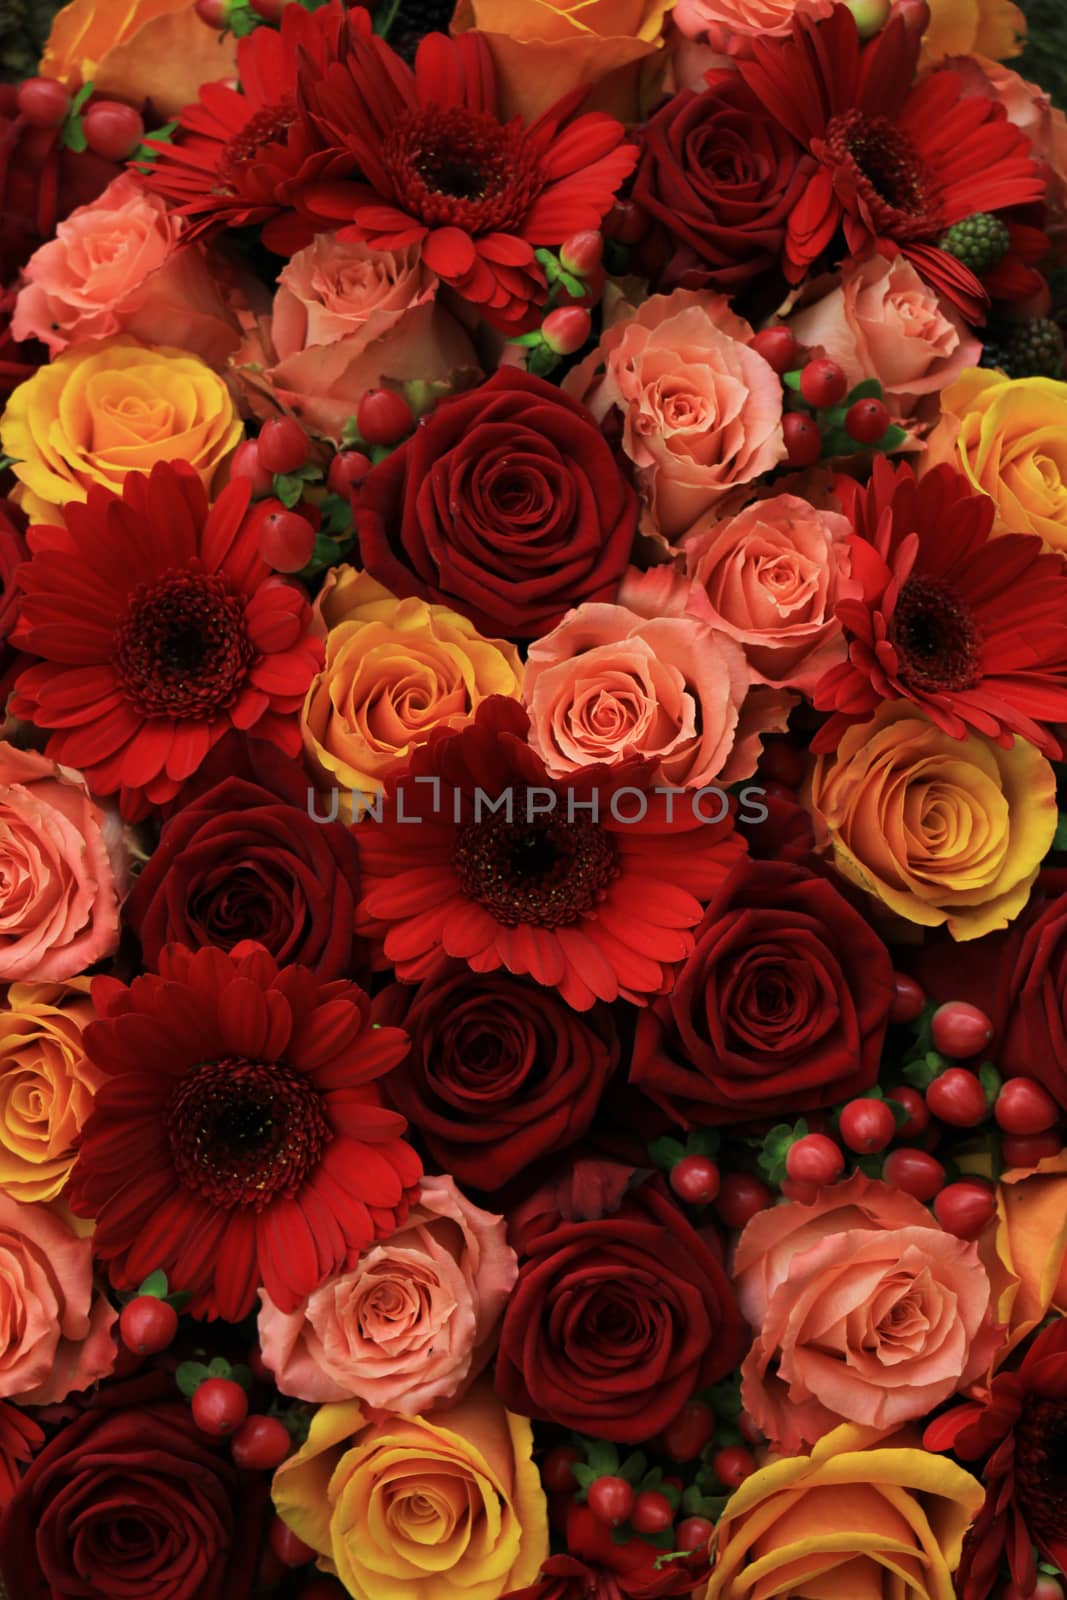 Mixed rose wedding flowers by studioportosabbia